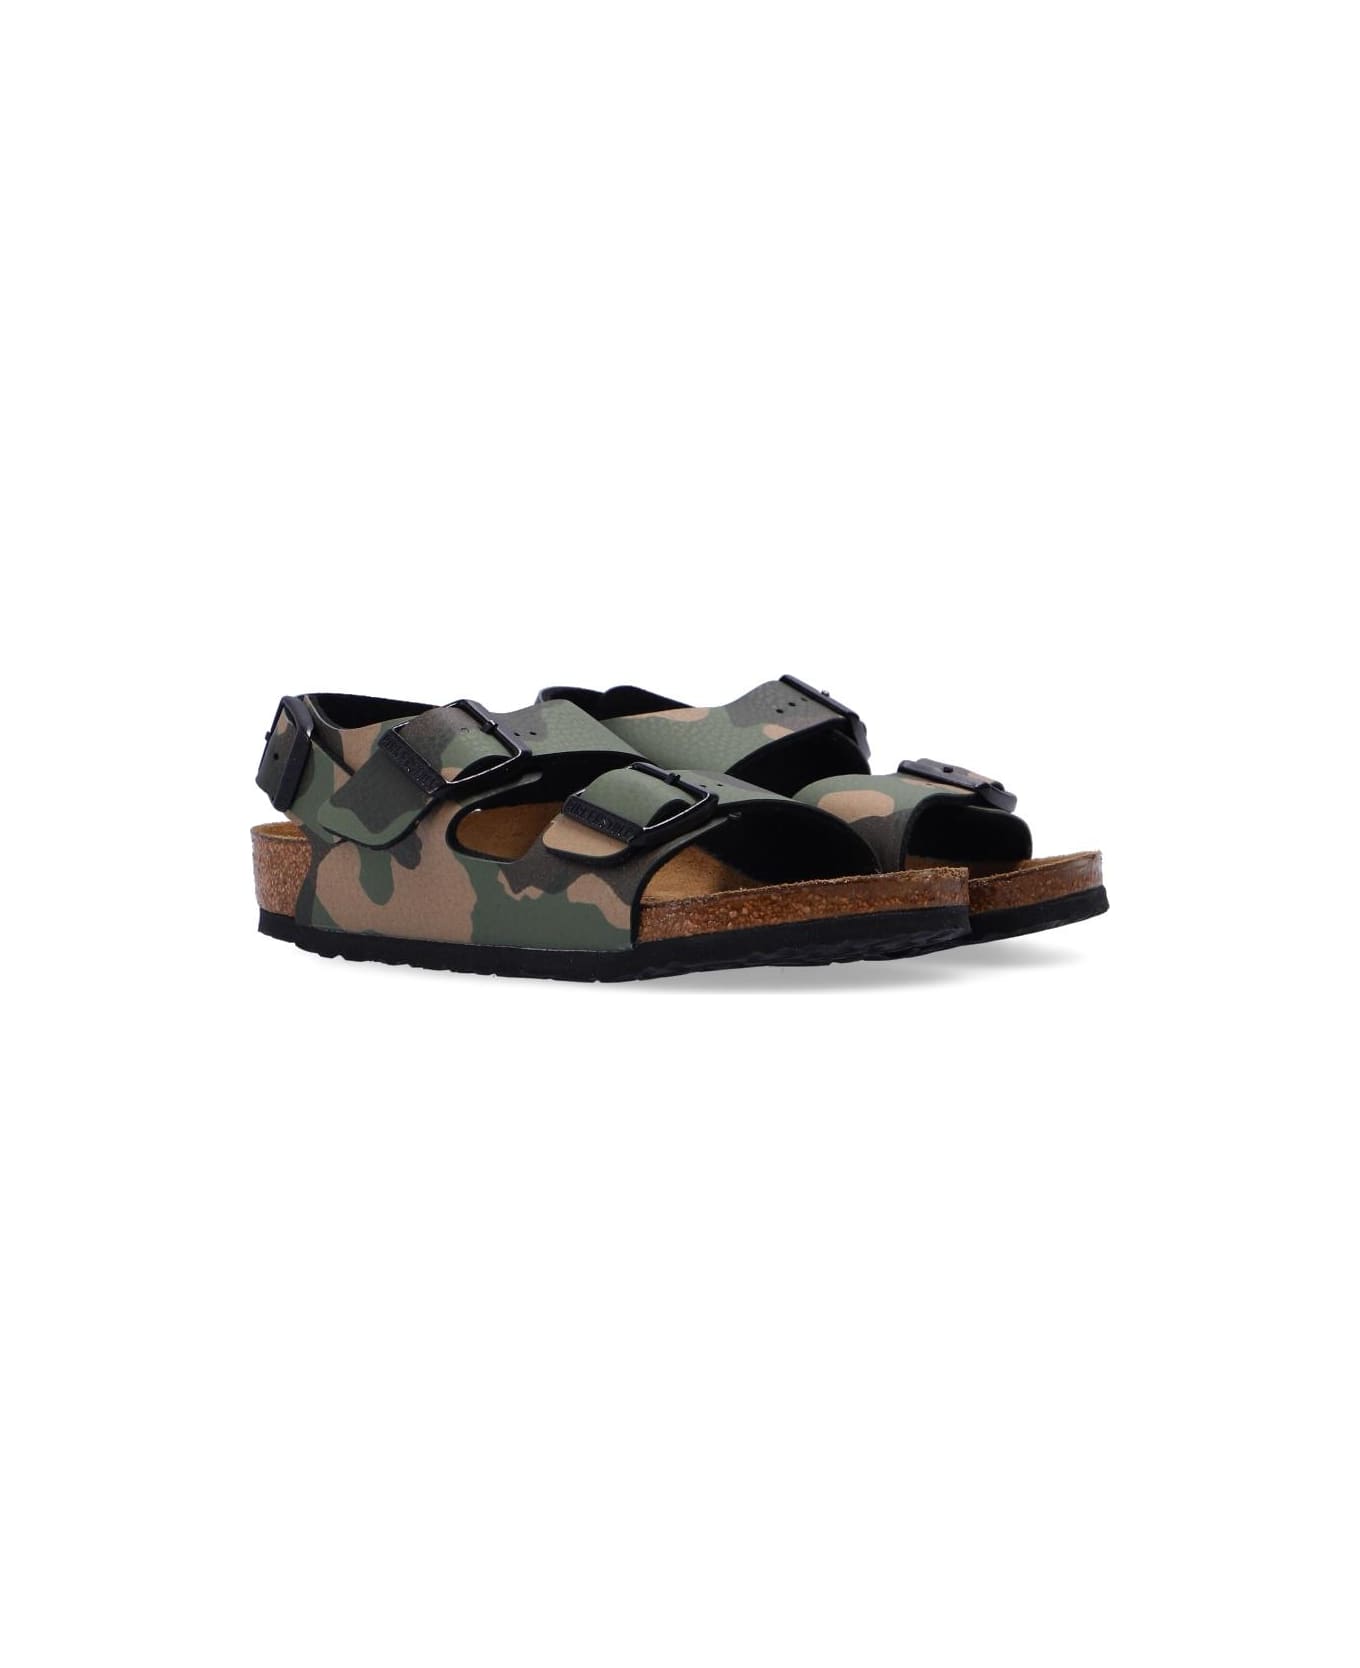 Birkenstock 'milano Kinder' Sandals - Soil Camouflage Green シューズ